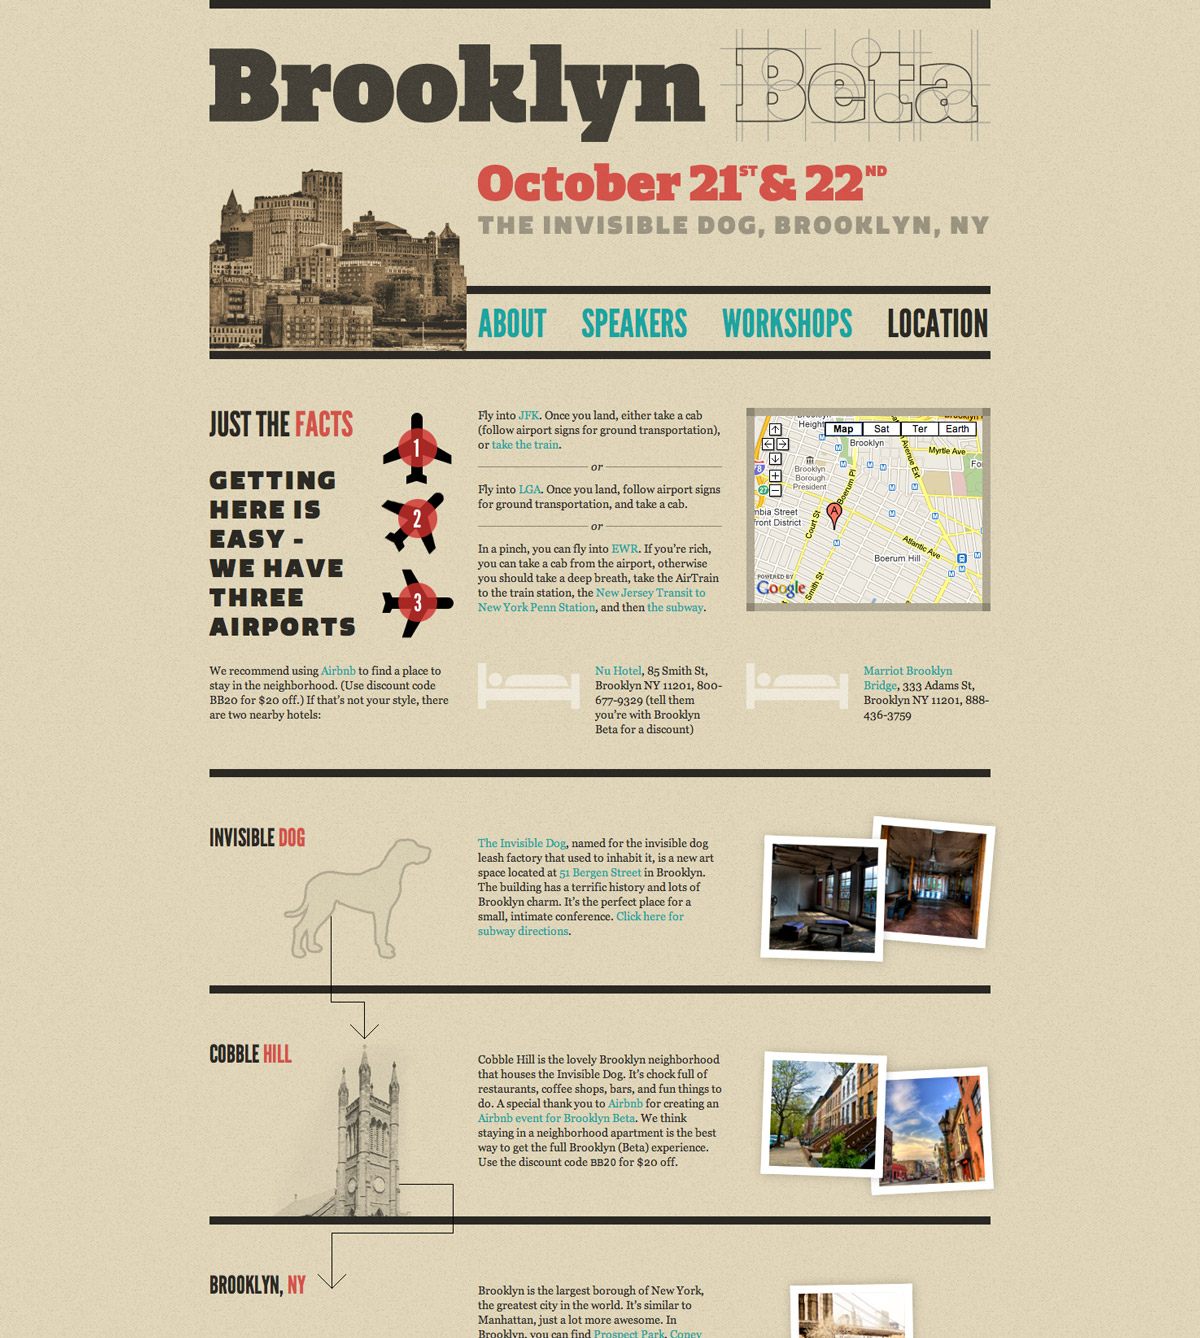 Brooklyn Beta website, 2010